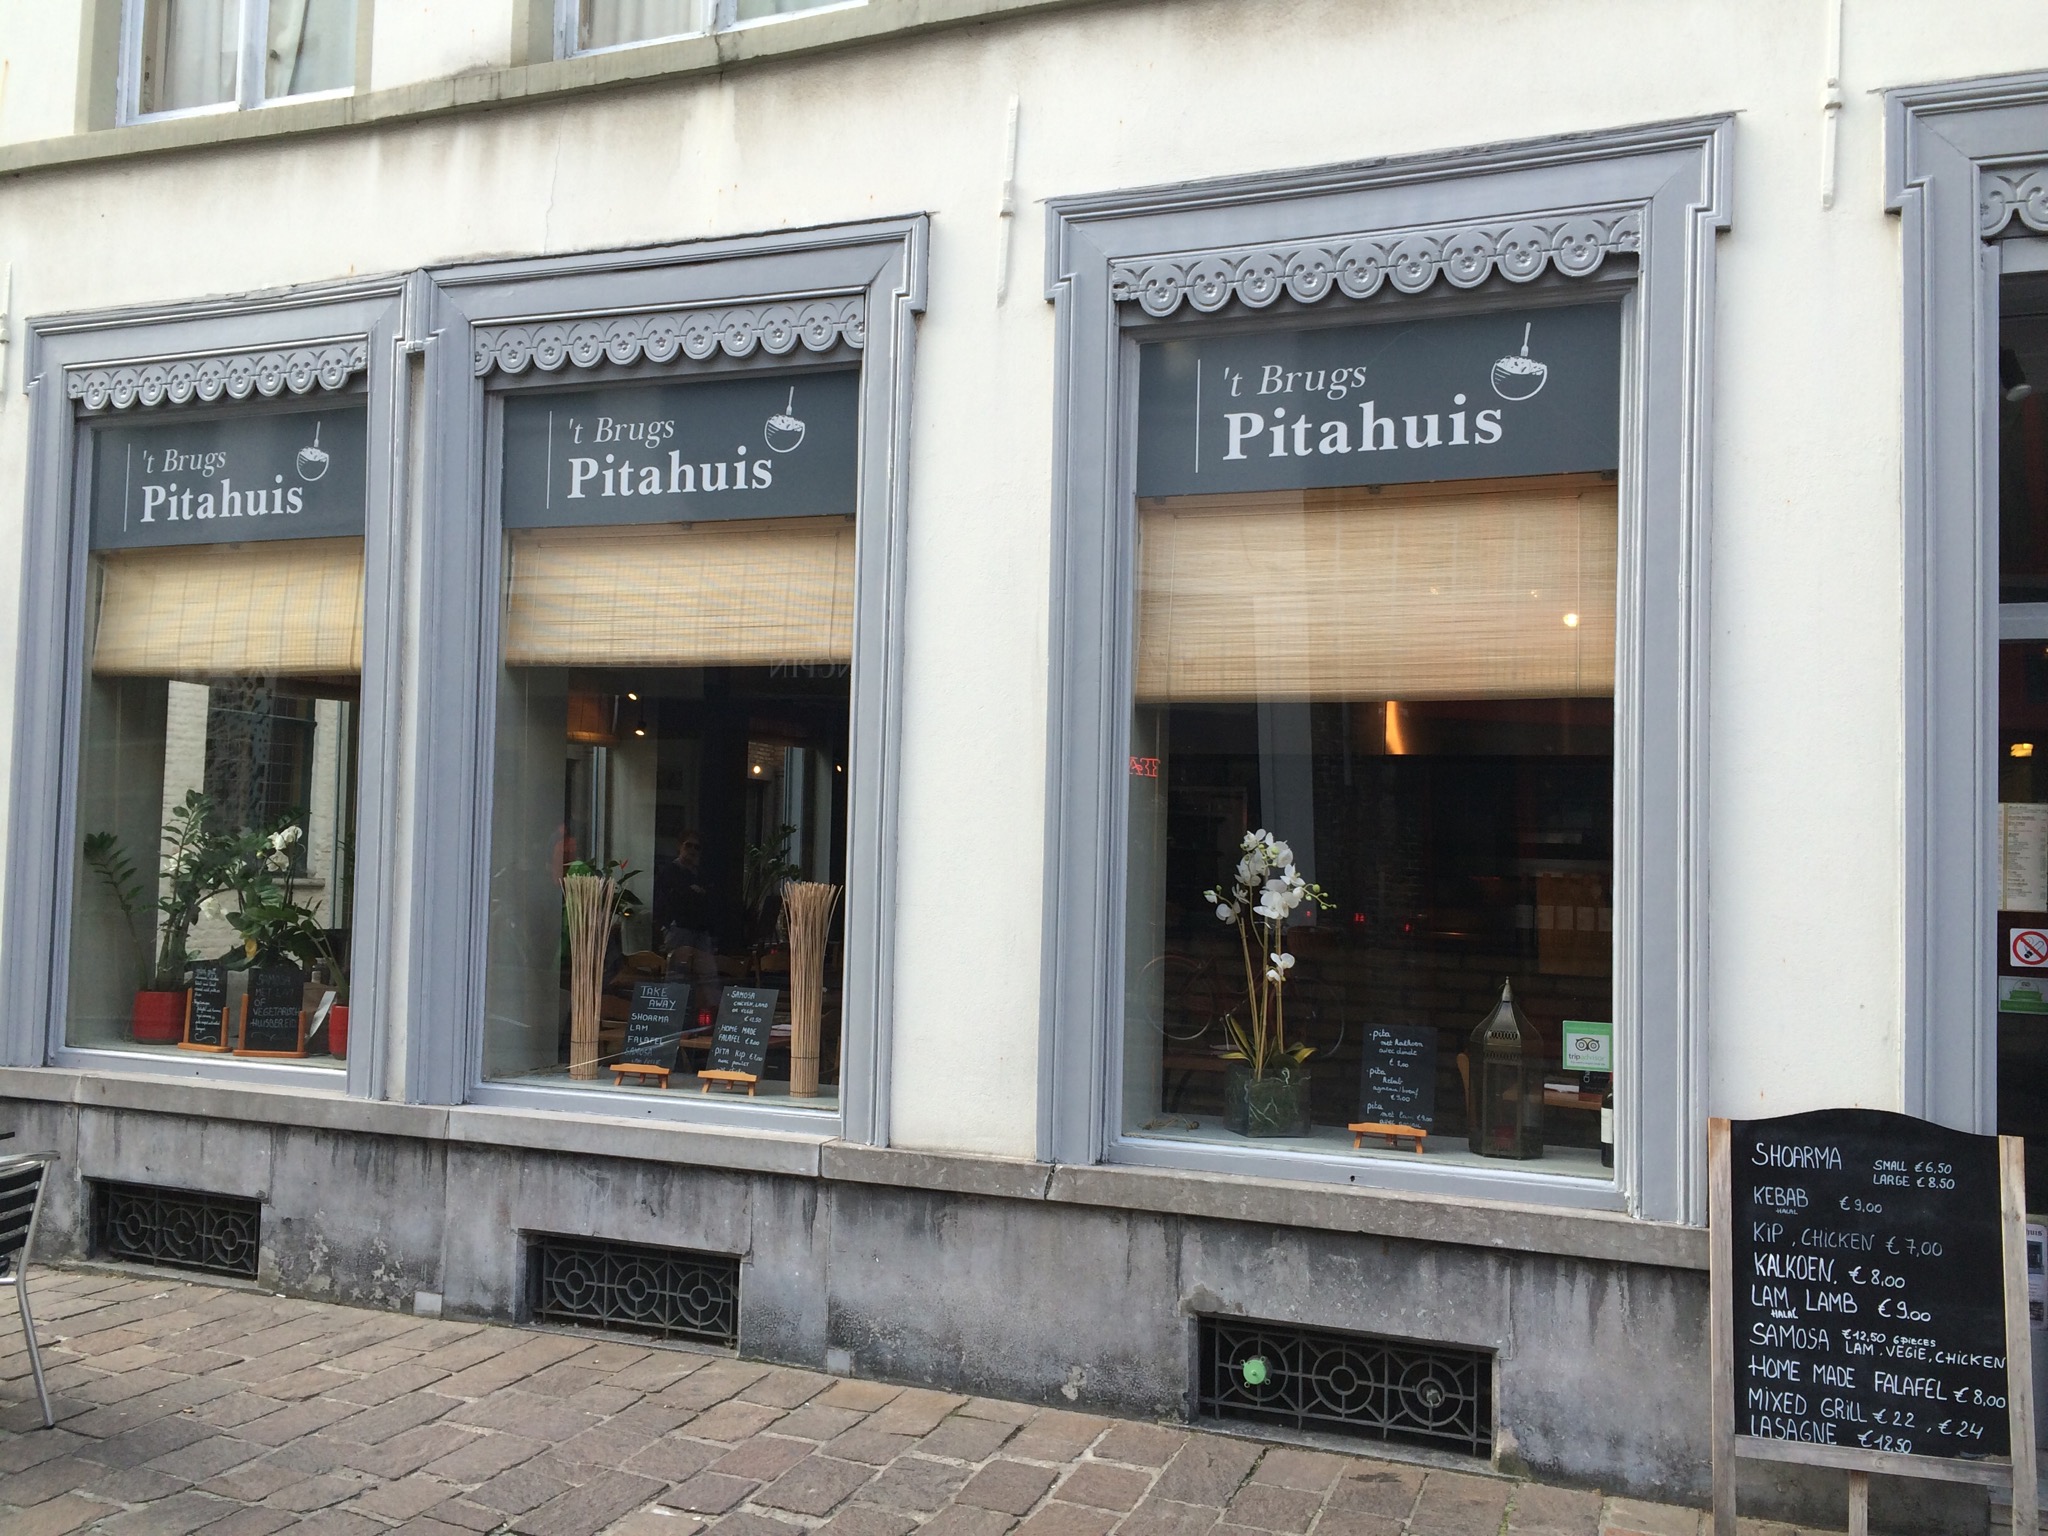 't Brugs Pitahuis in Brugge